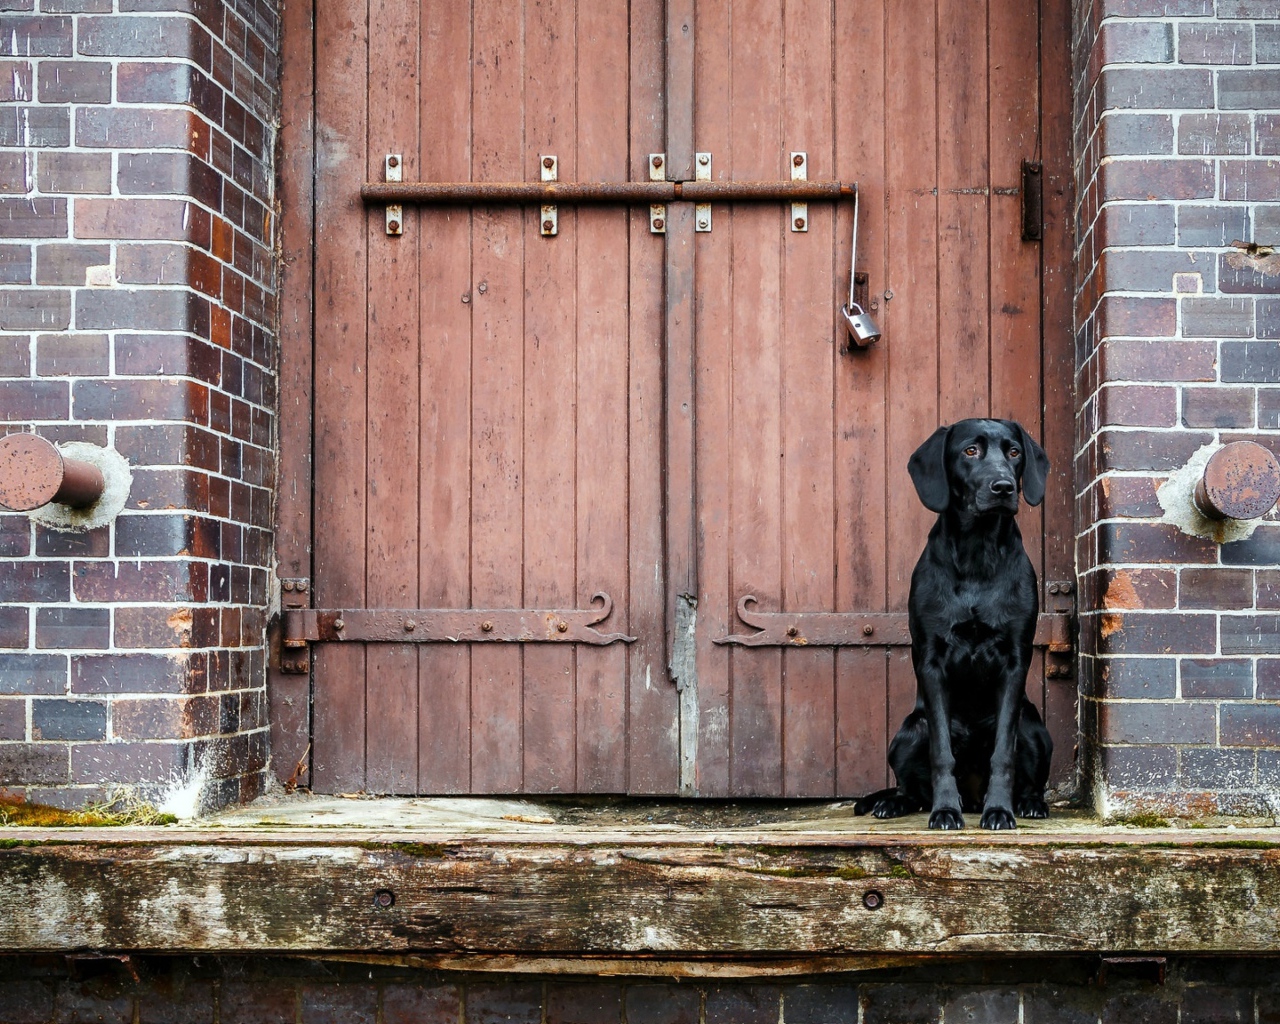 Black Labrador is sitting at the door